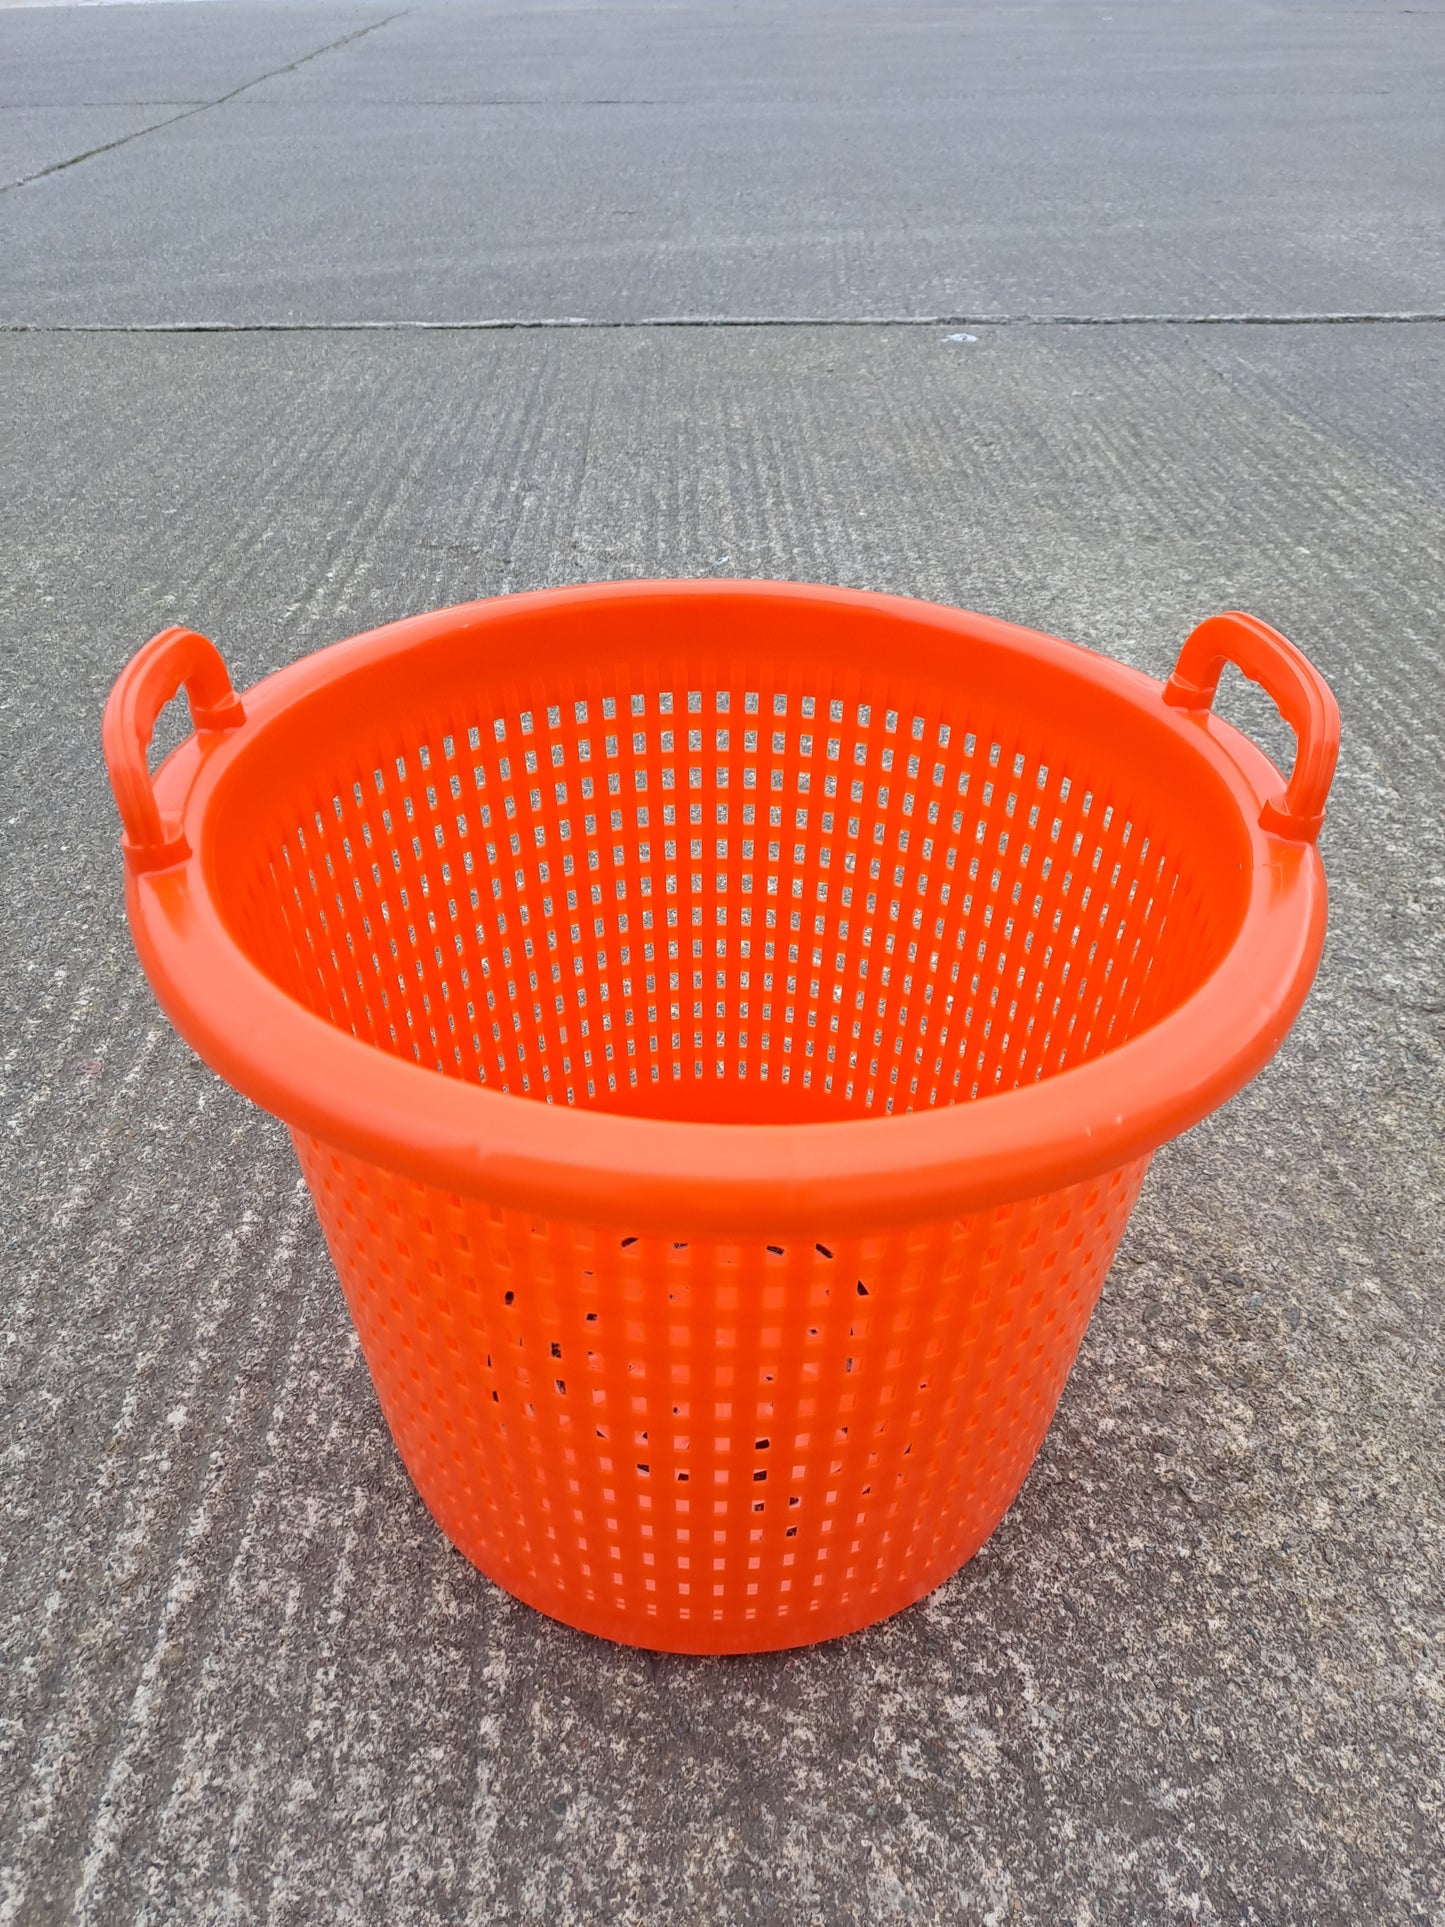 Baskets - 45L